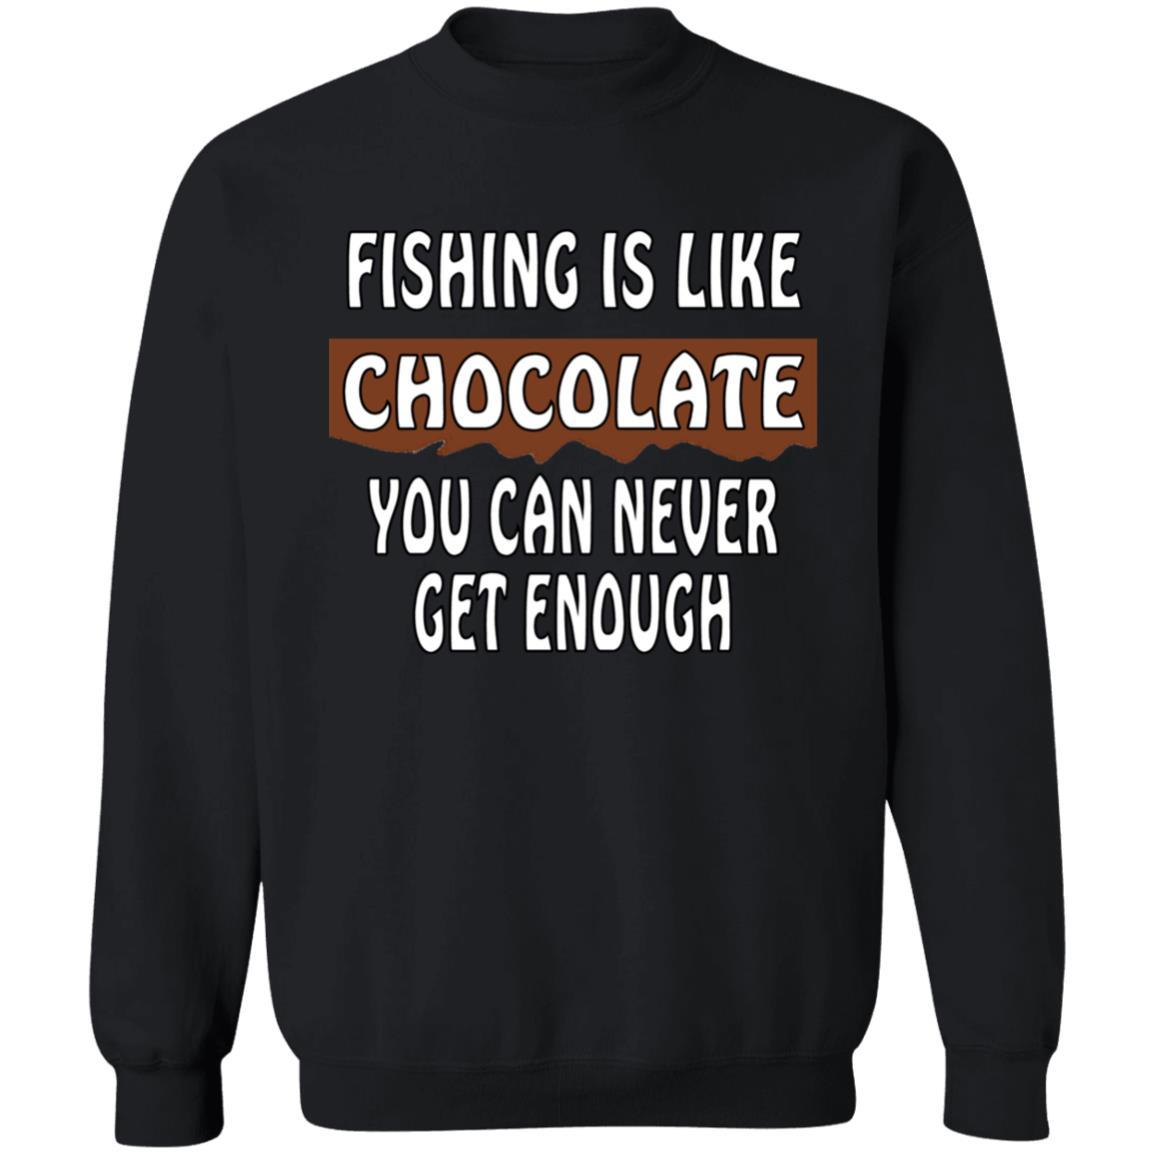 Fishing is like chocolate you can never get enough sweatshirt black